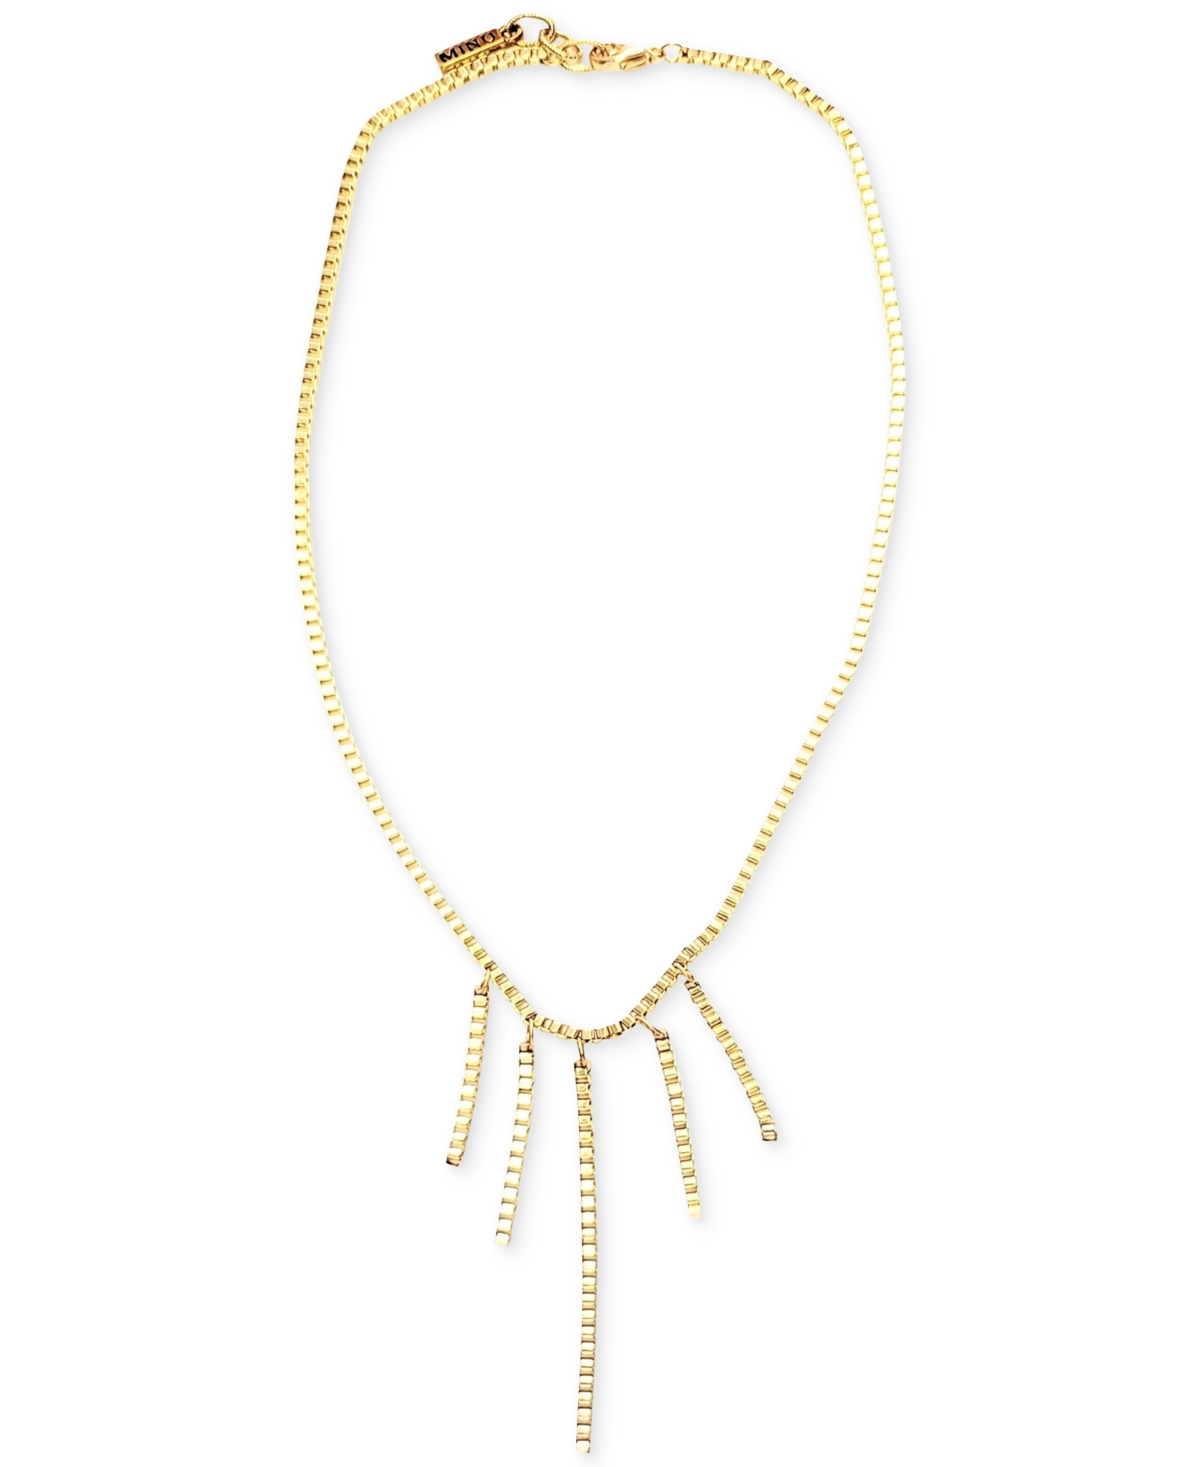 Minu Jewels Gold-Tone Box Chain Fringe Statement Necklace, 16" + 1" extender